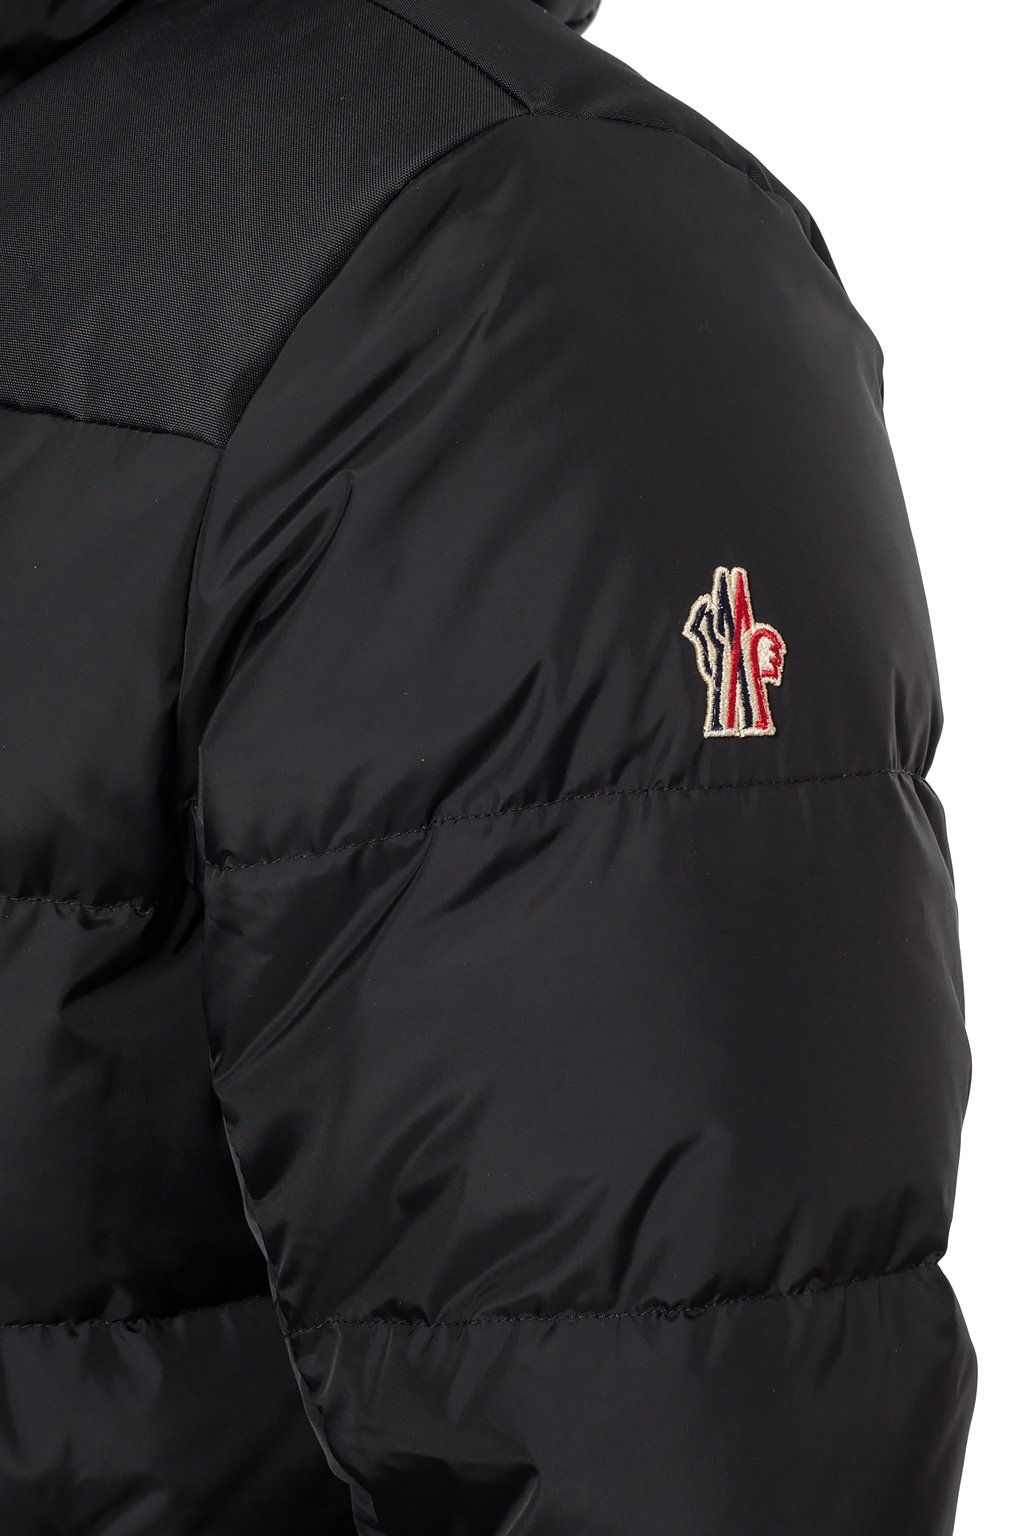 moncler grenoble rodenberg jacket